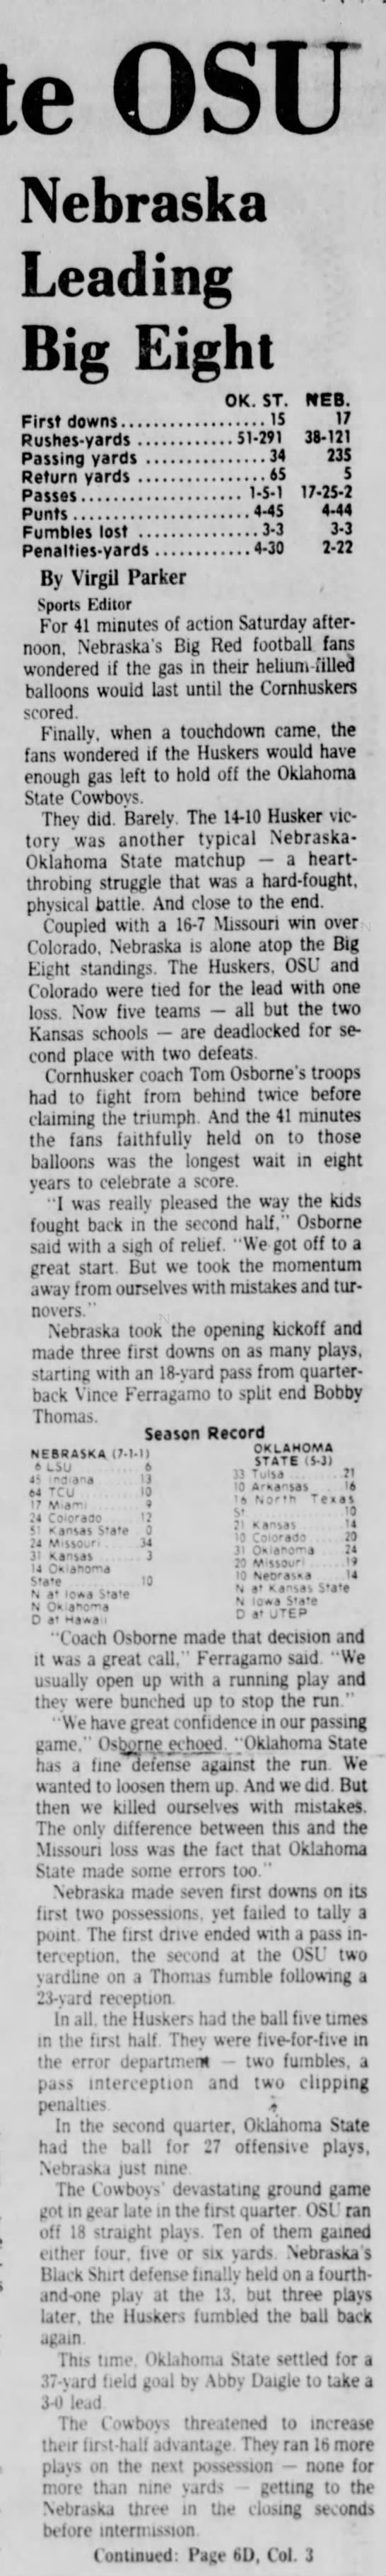 1976 Nebraska-Oklahoma State football, part 1 - 